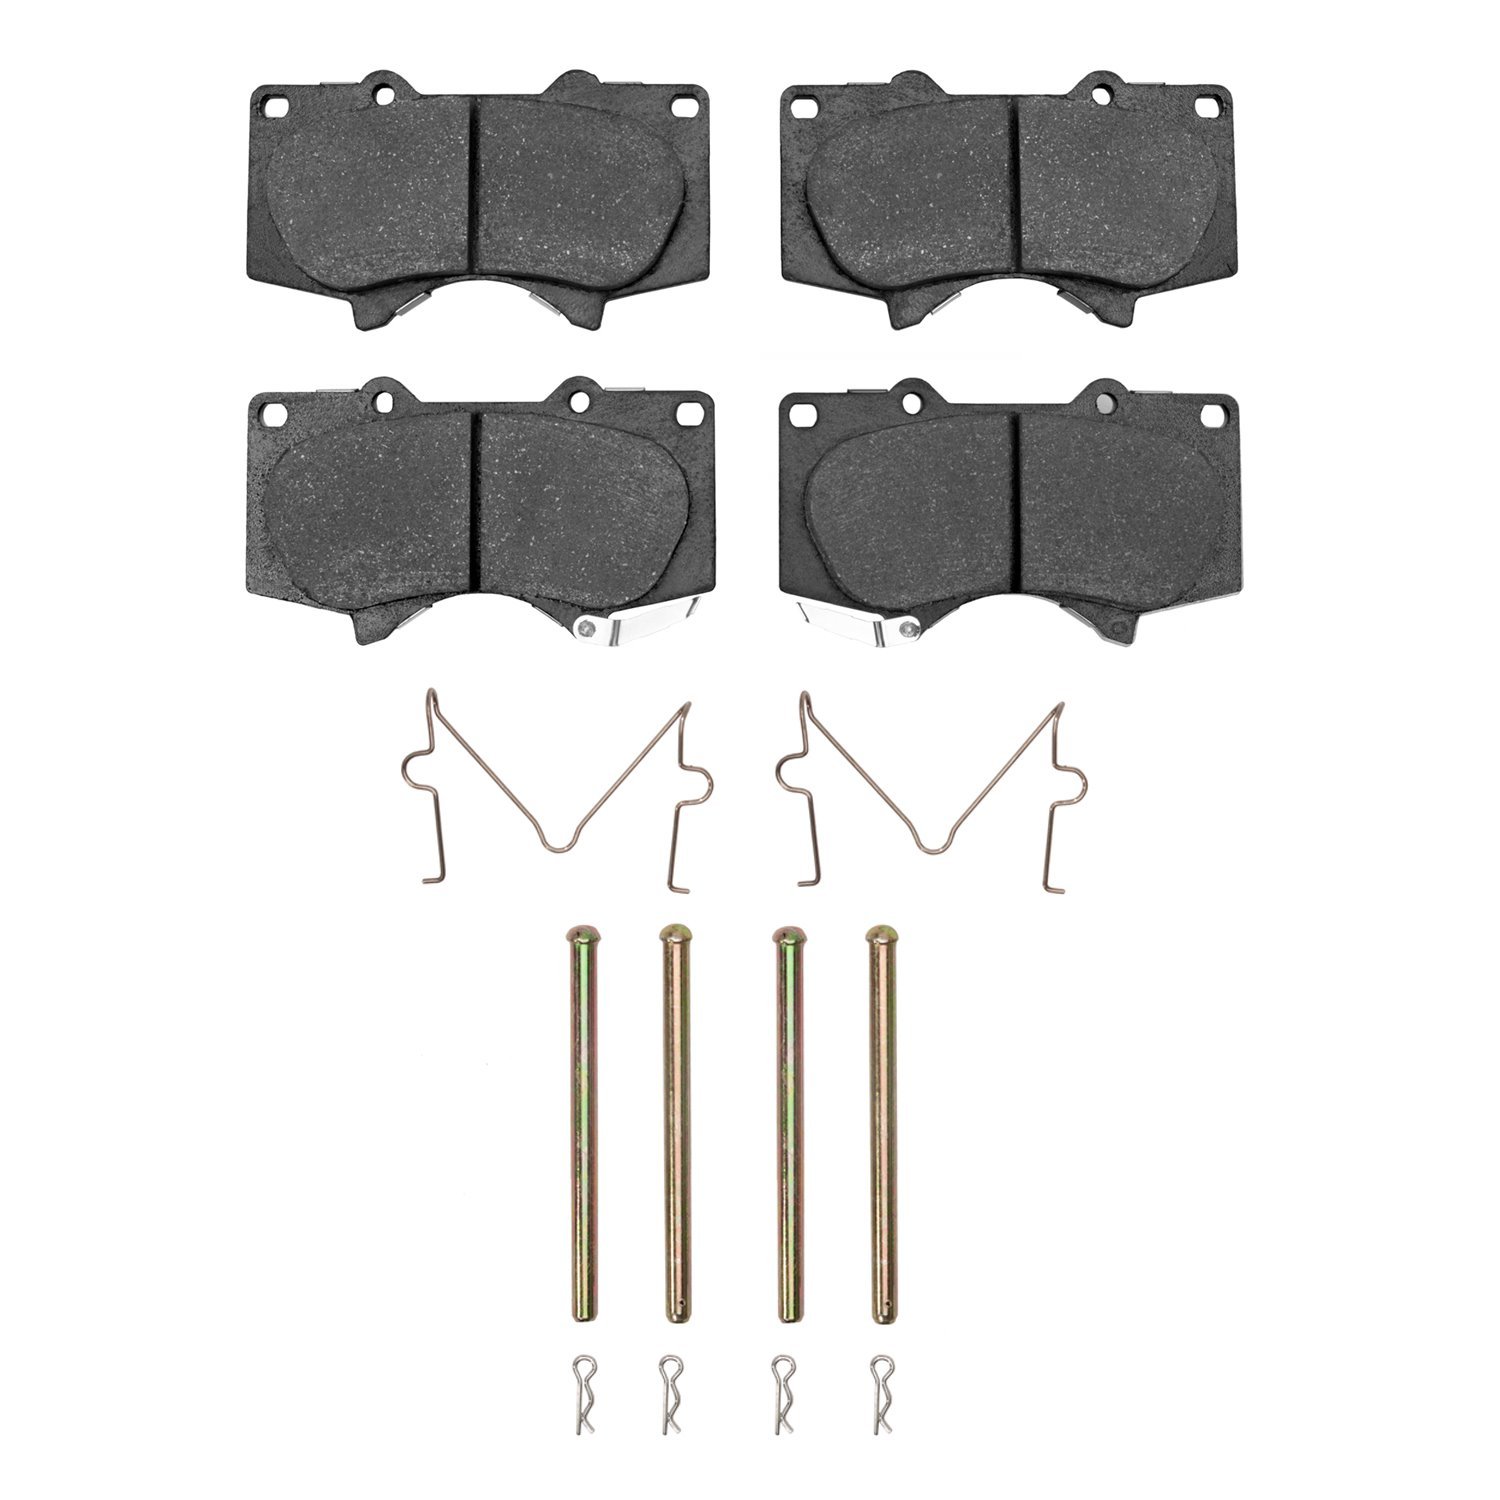 1551-0976-01 5000 Advanced Ceramic Brake Pads & Hardware Kit, Fits Select Multiple Makes/Models, Position: Front